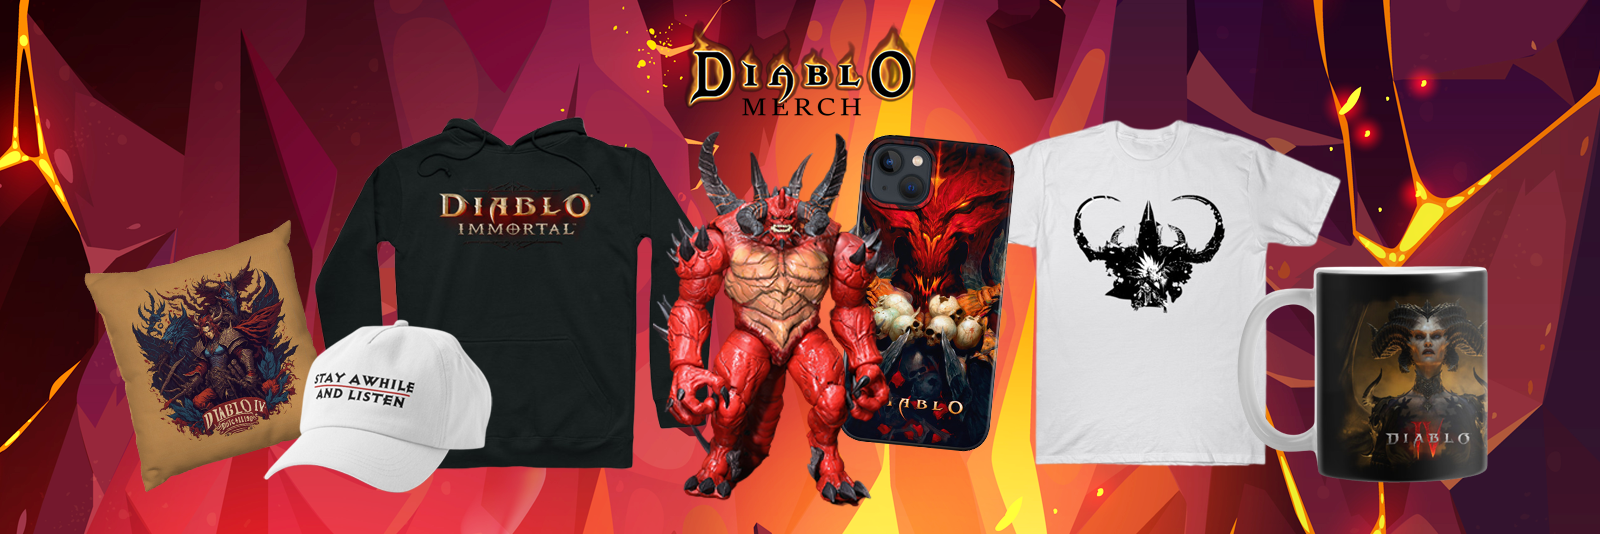 Diablo Merch - Diablo Store